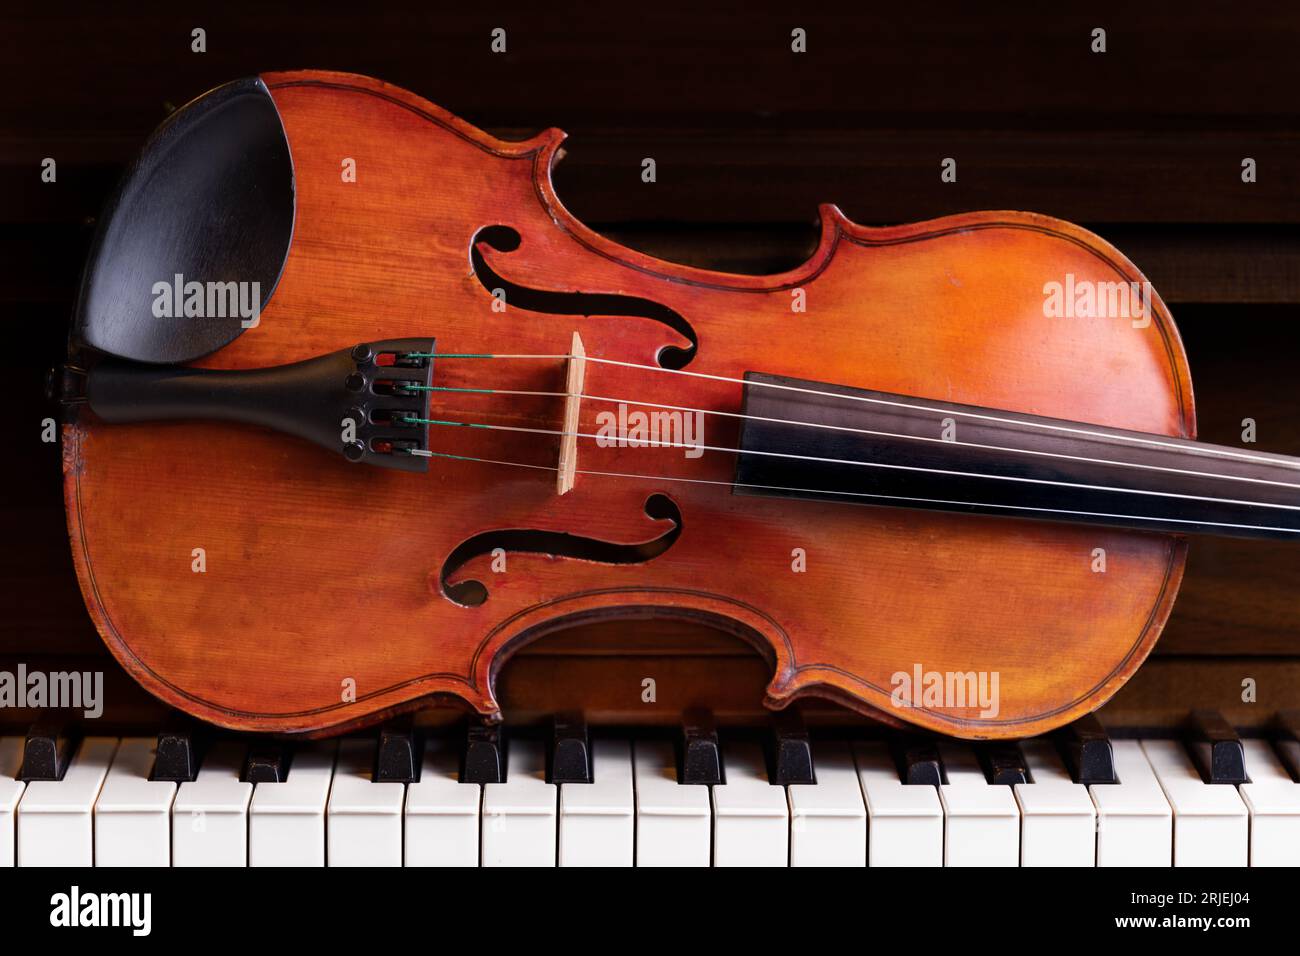 Violin on piano Stock Photo